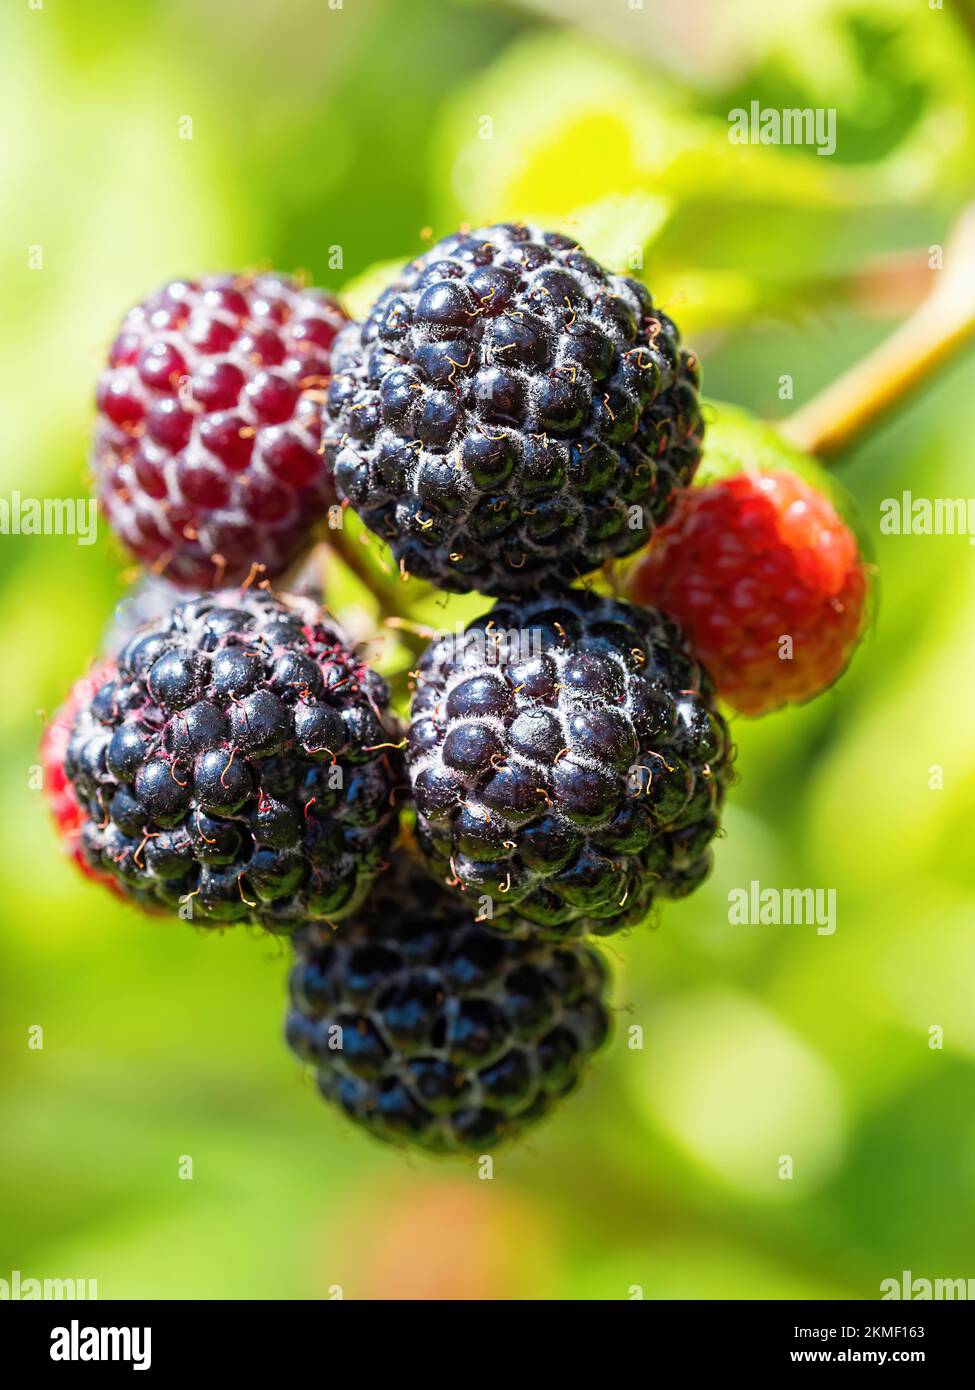 Natural fresh blackberries in garden. Bunch of ripe blackberry fruit - Rubus occidentalis - cultivar BRISTOL on branch of plant with green leaves on f Stock Photo